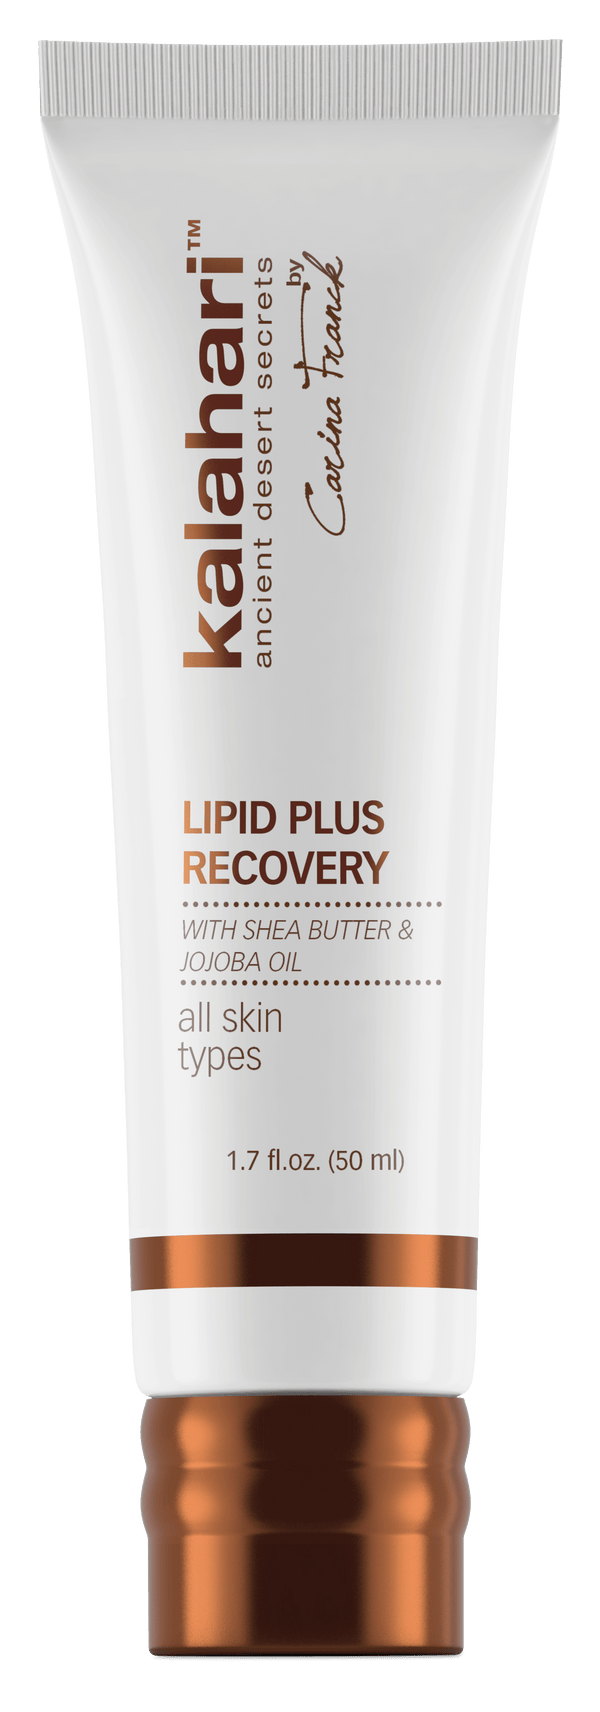 Lipid plus recovery therapeutic